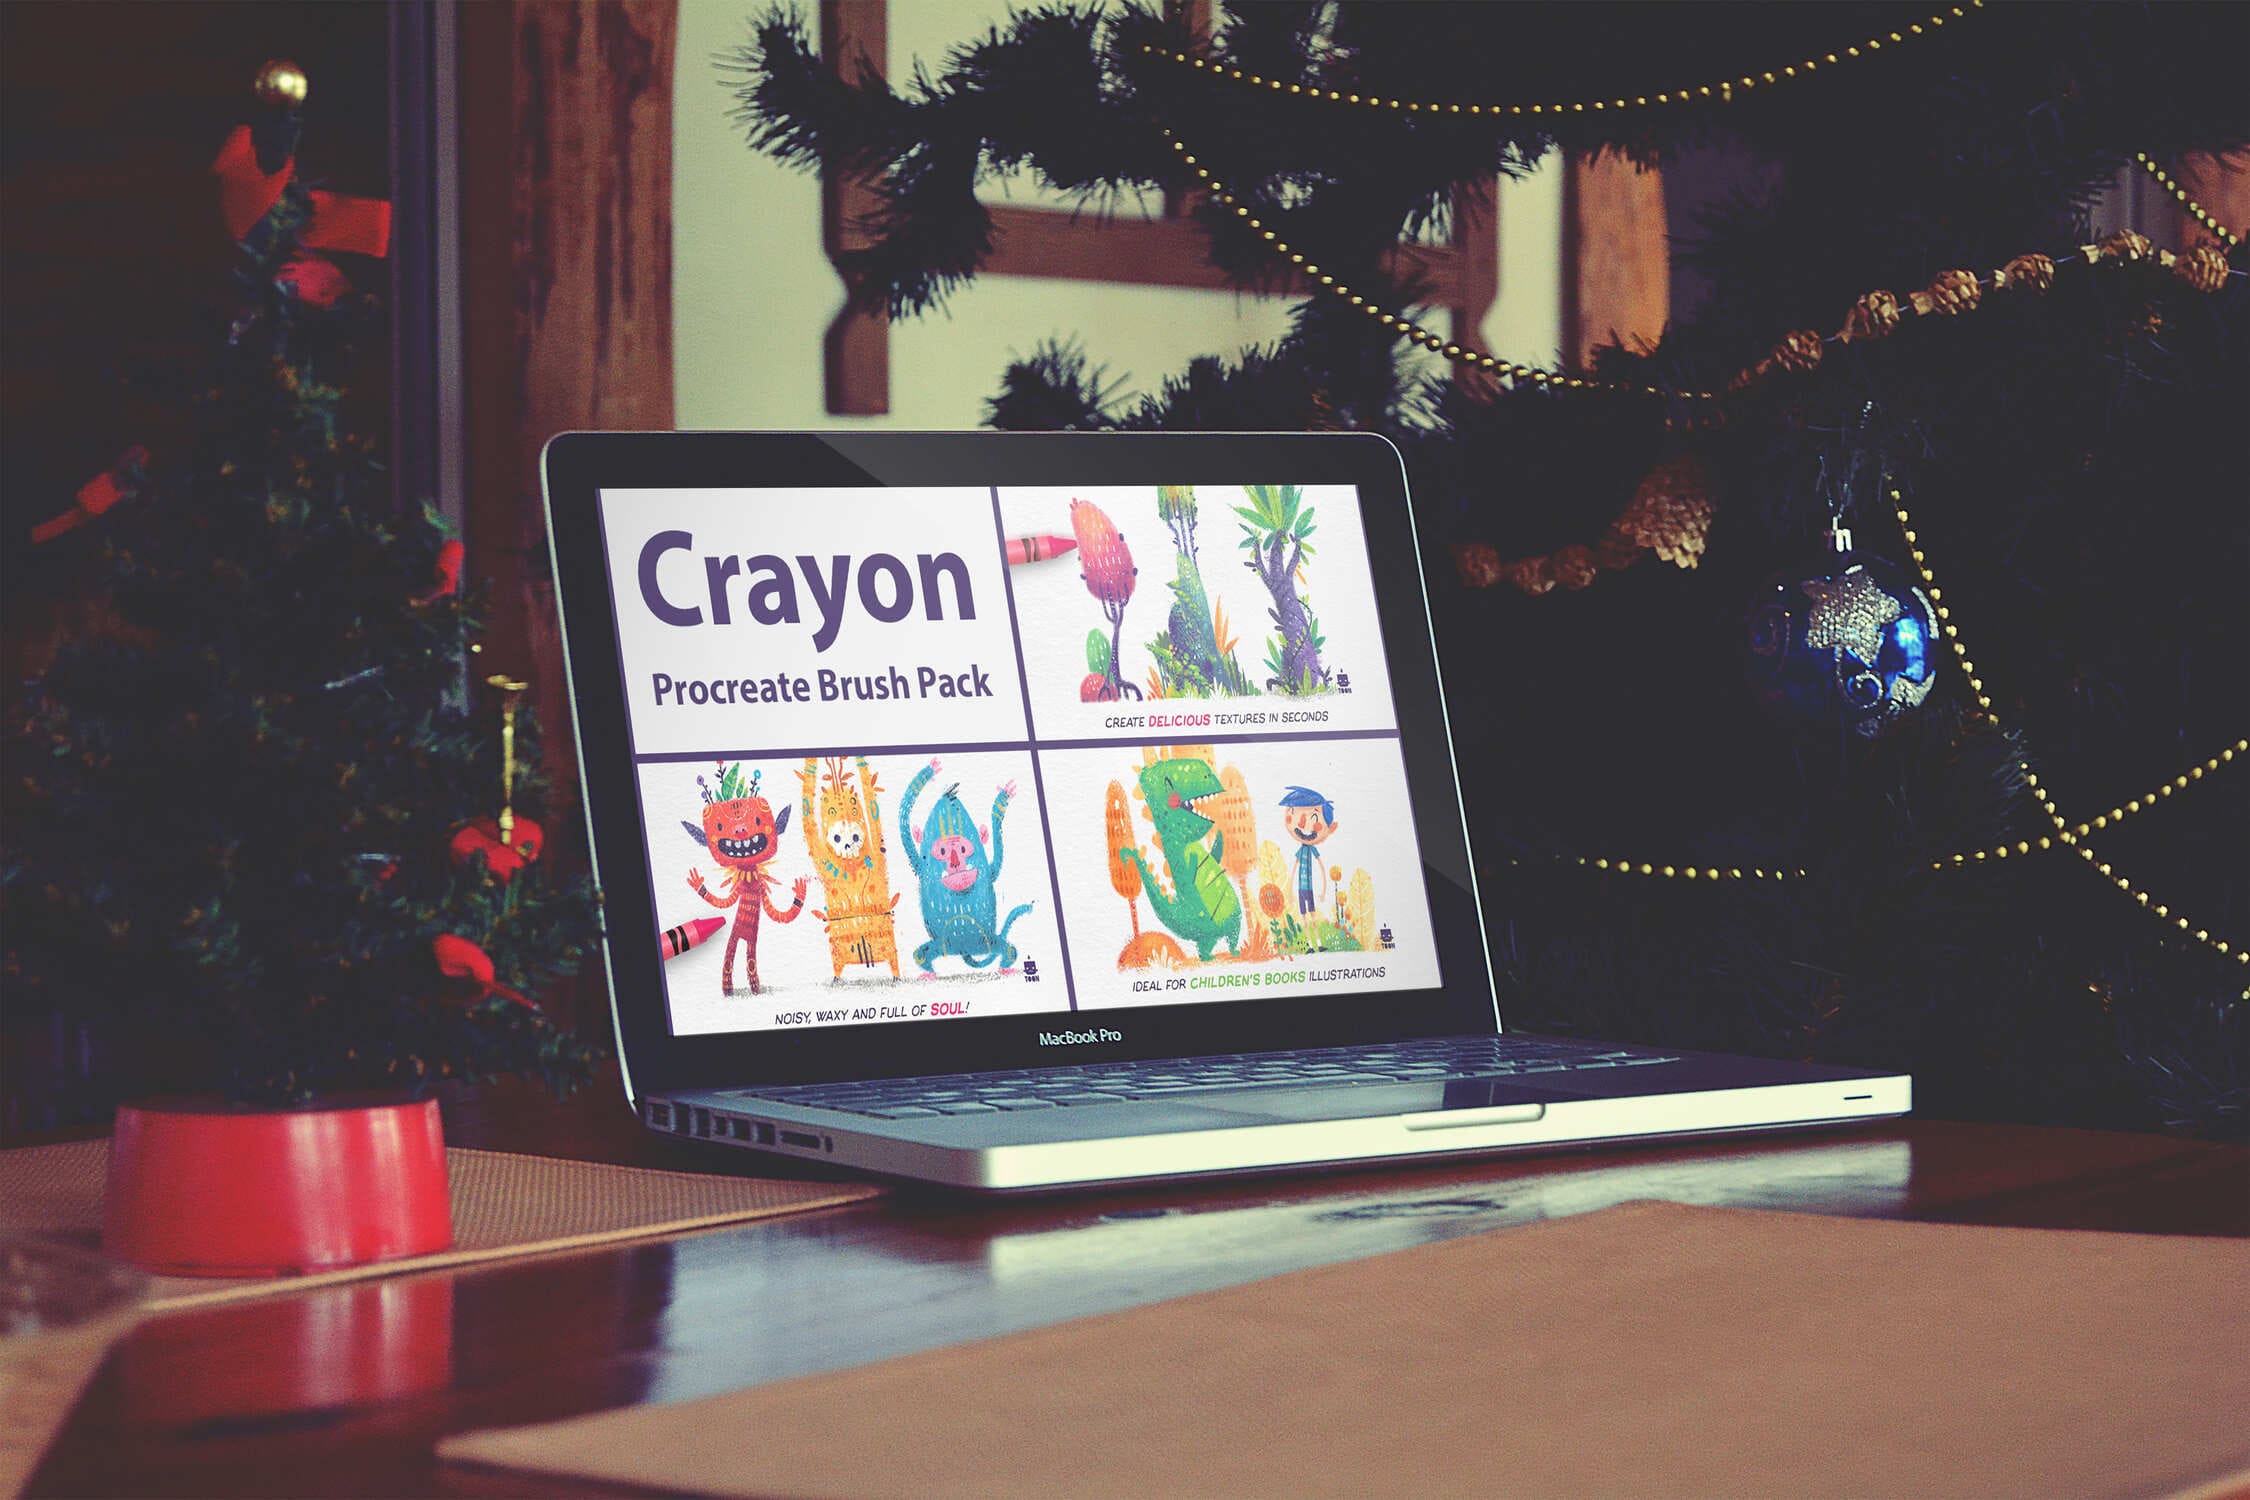 Crayon Procreate Brush Pack On The Laptop.